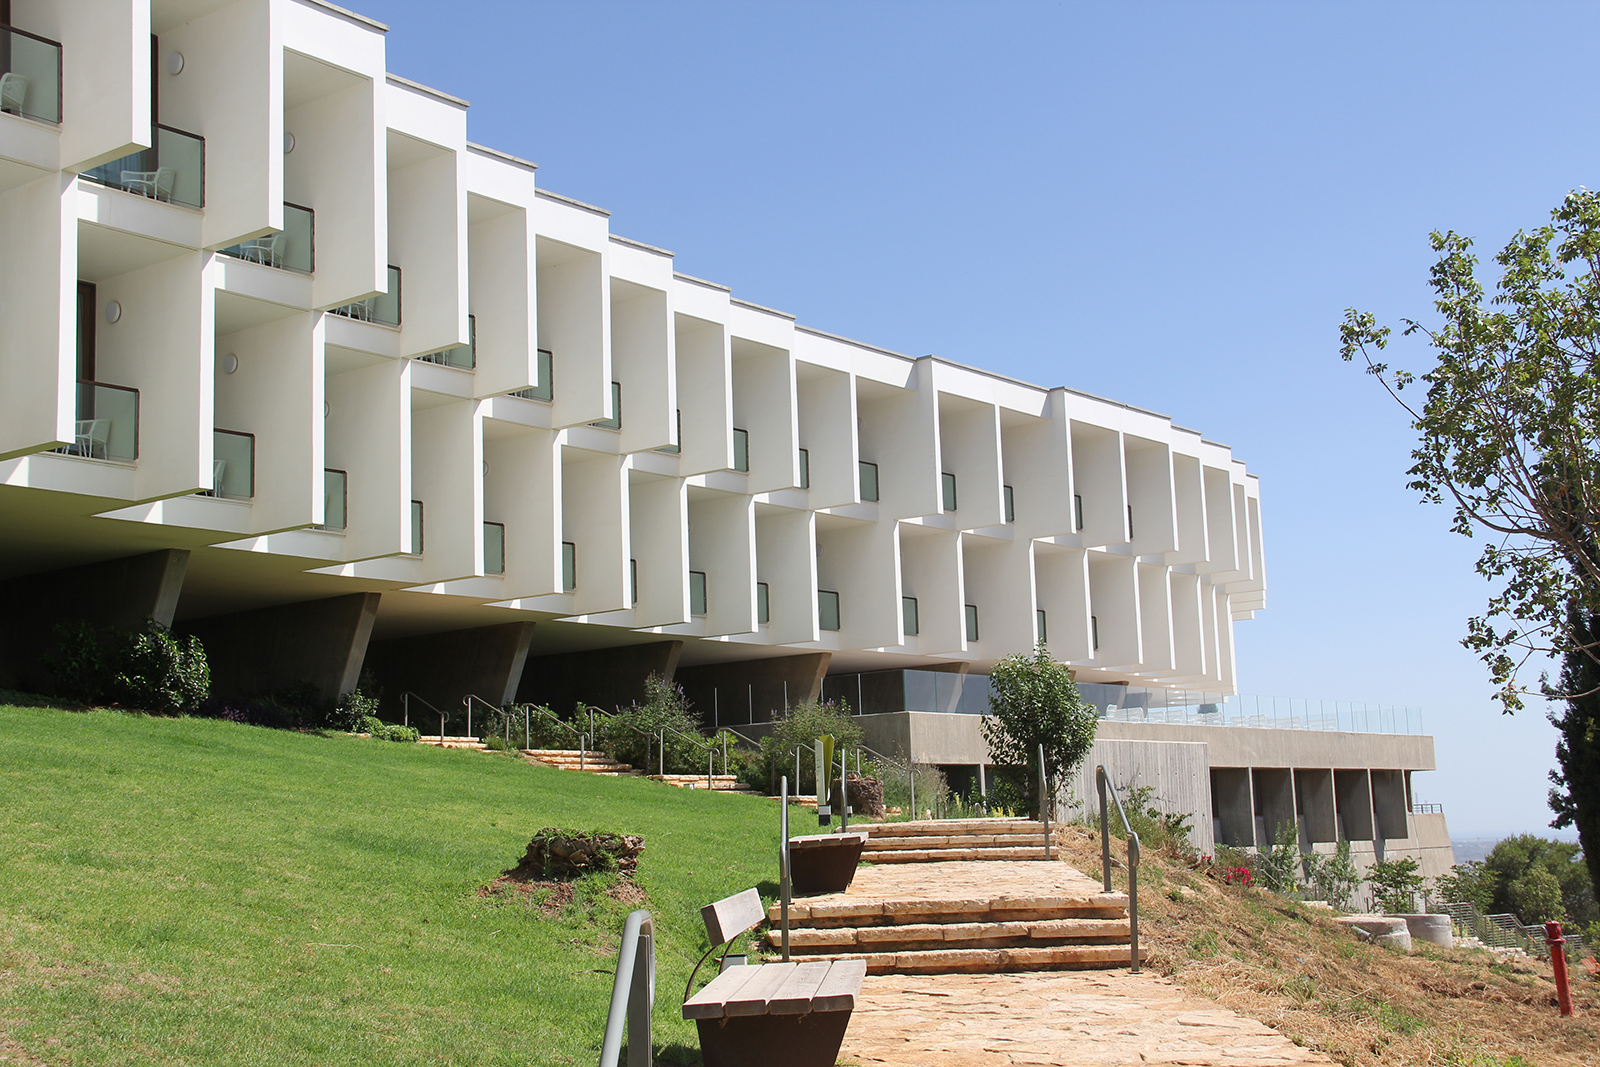 Israeli design hotels: Elma Arts complex and hotel